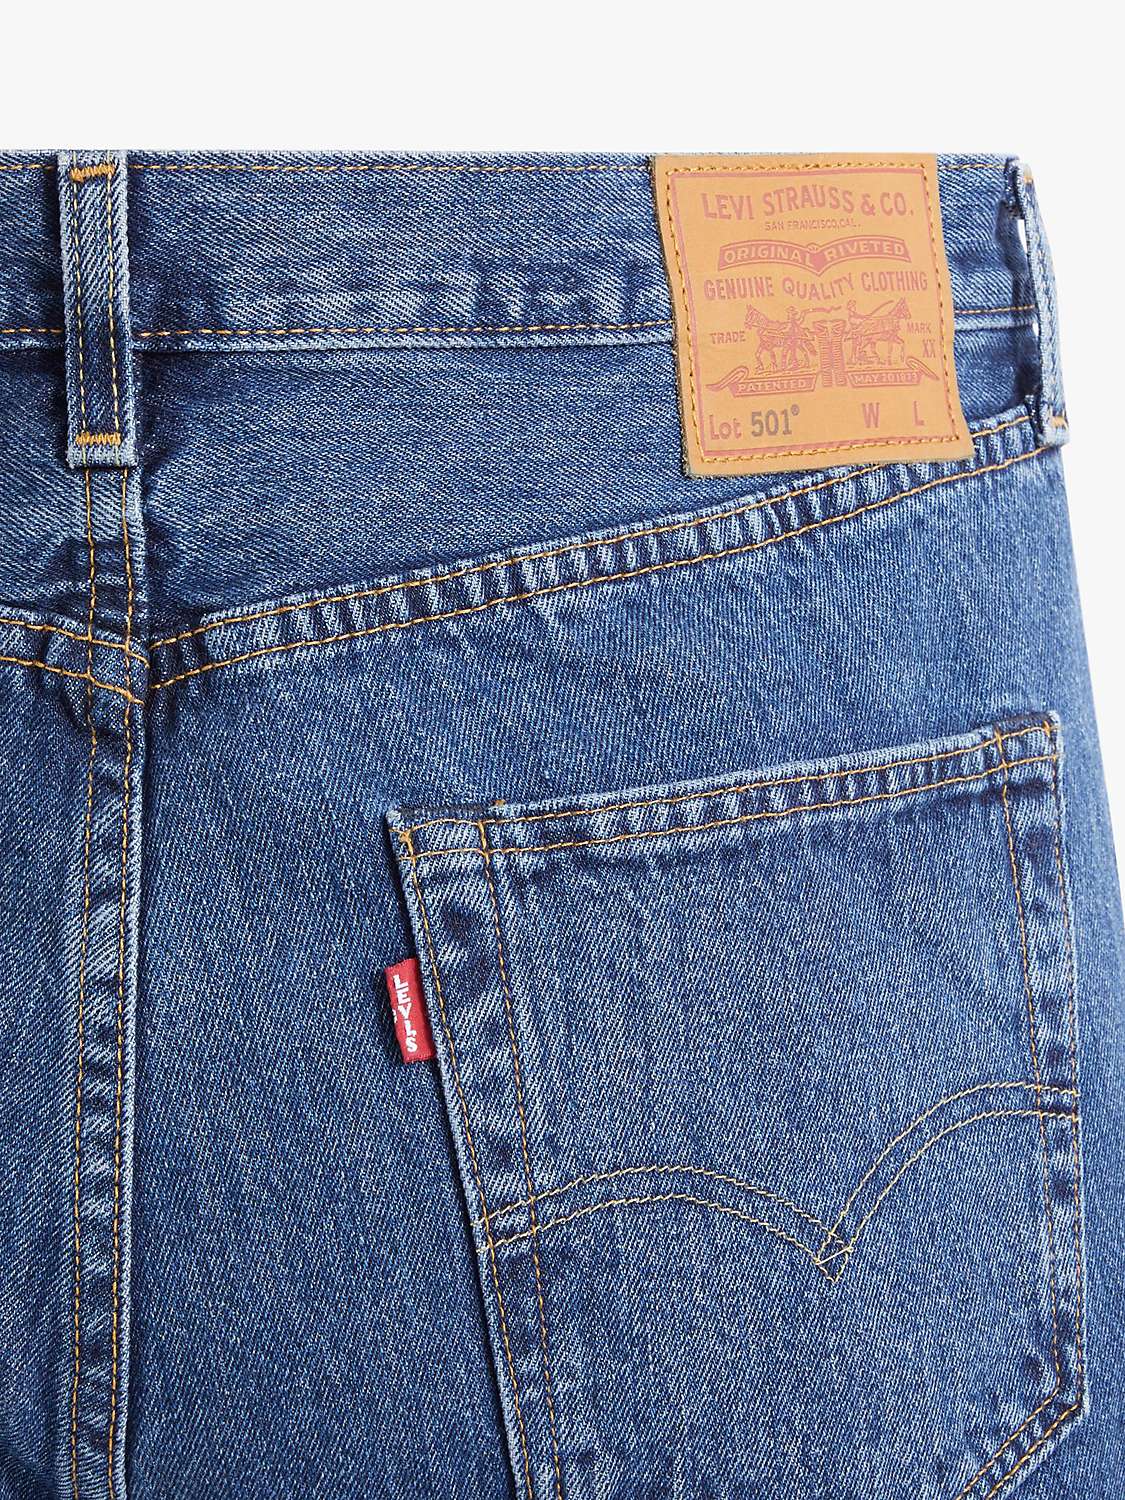 Levi's Big & Tall 501 Original Straight Jeans, Stonewash at John Lewis ...